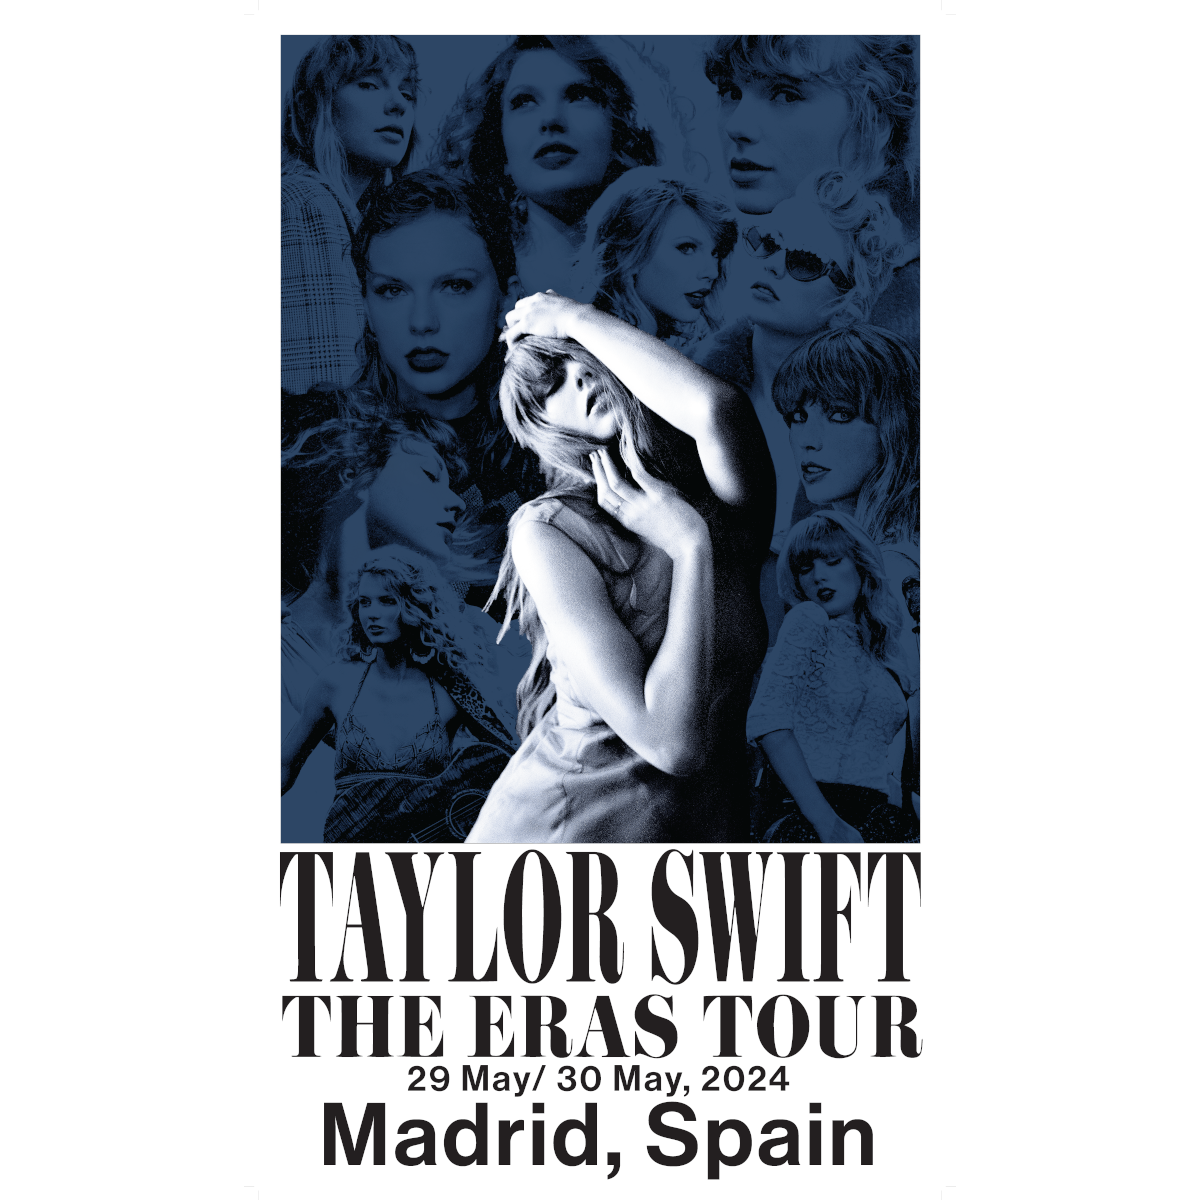 https://images.bravado.de/prod/product-assets/product-asset-data/taylor-swift/taylor-swift/products/507942/web/445330/image-thumb__445330__3000x3000_original/Taylor-Swift-Taylor-Swift-The-Eras-Tour-Madrid-Spain-Poster-Poster-mehrfarbig-507942-445330.d1ab3cde.png